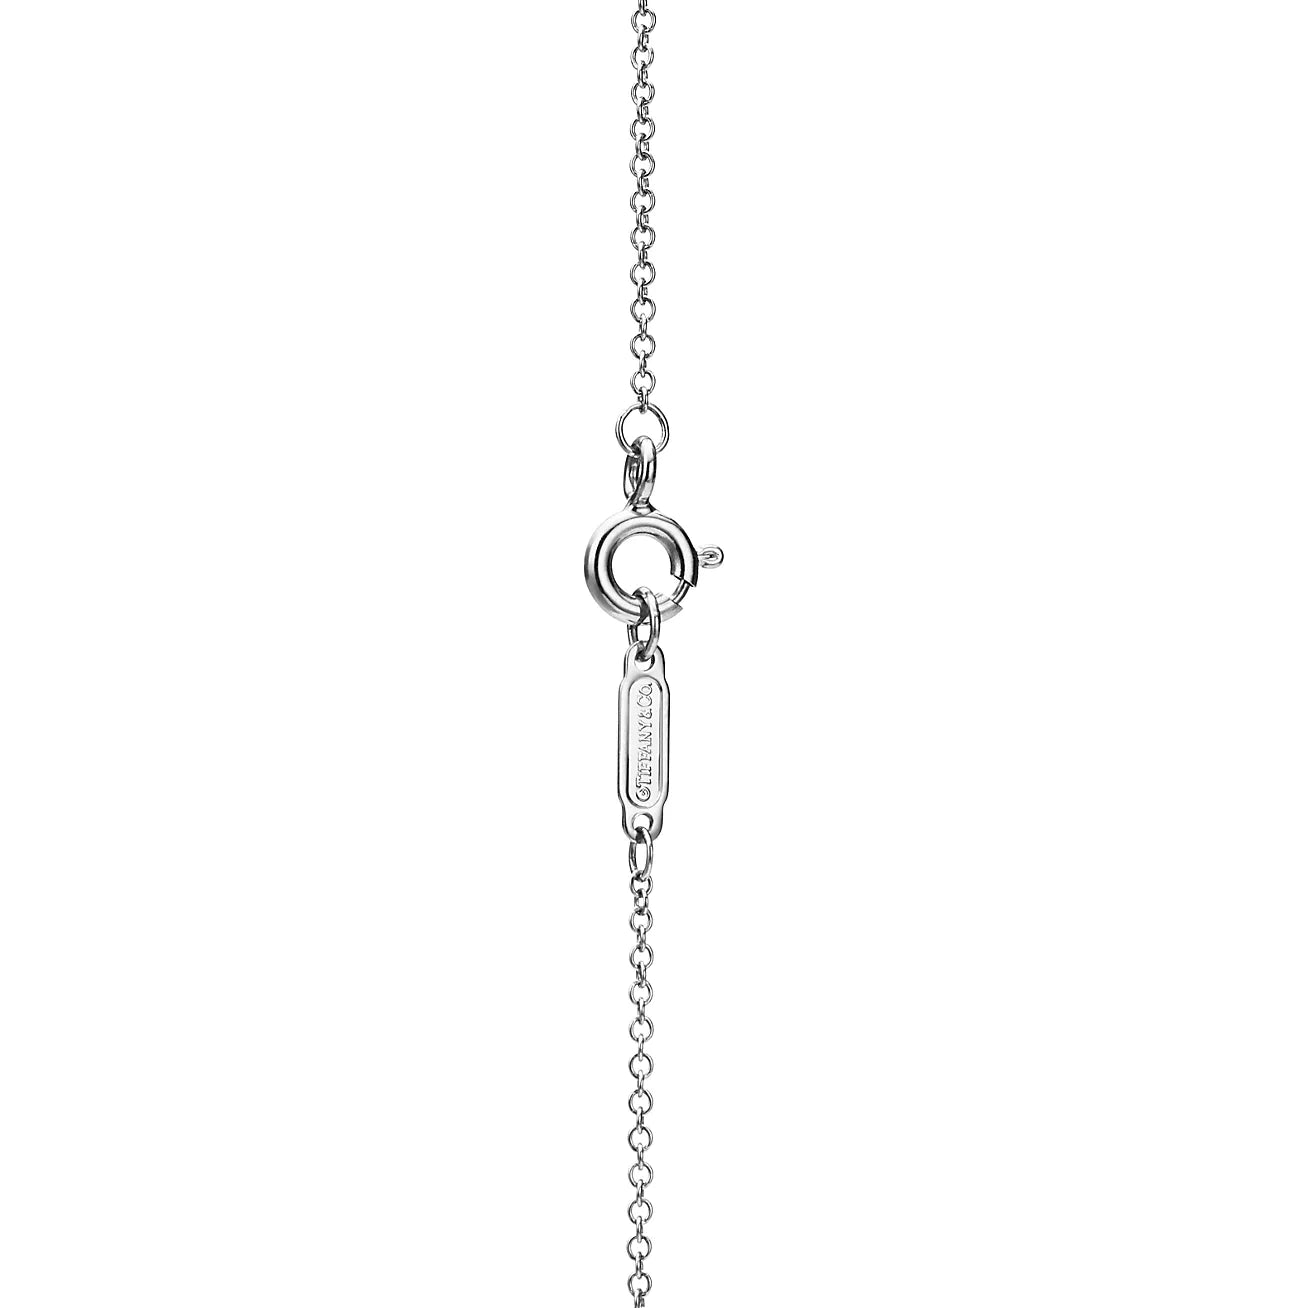 Preowned Tiffany & Co. Single Diamond Pendant Necklace